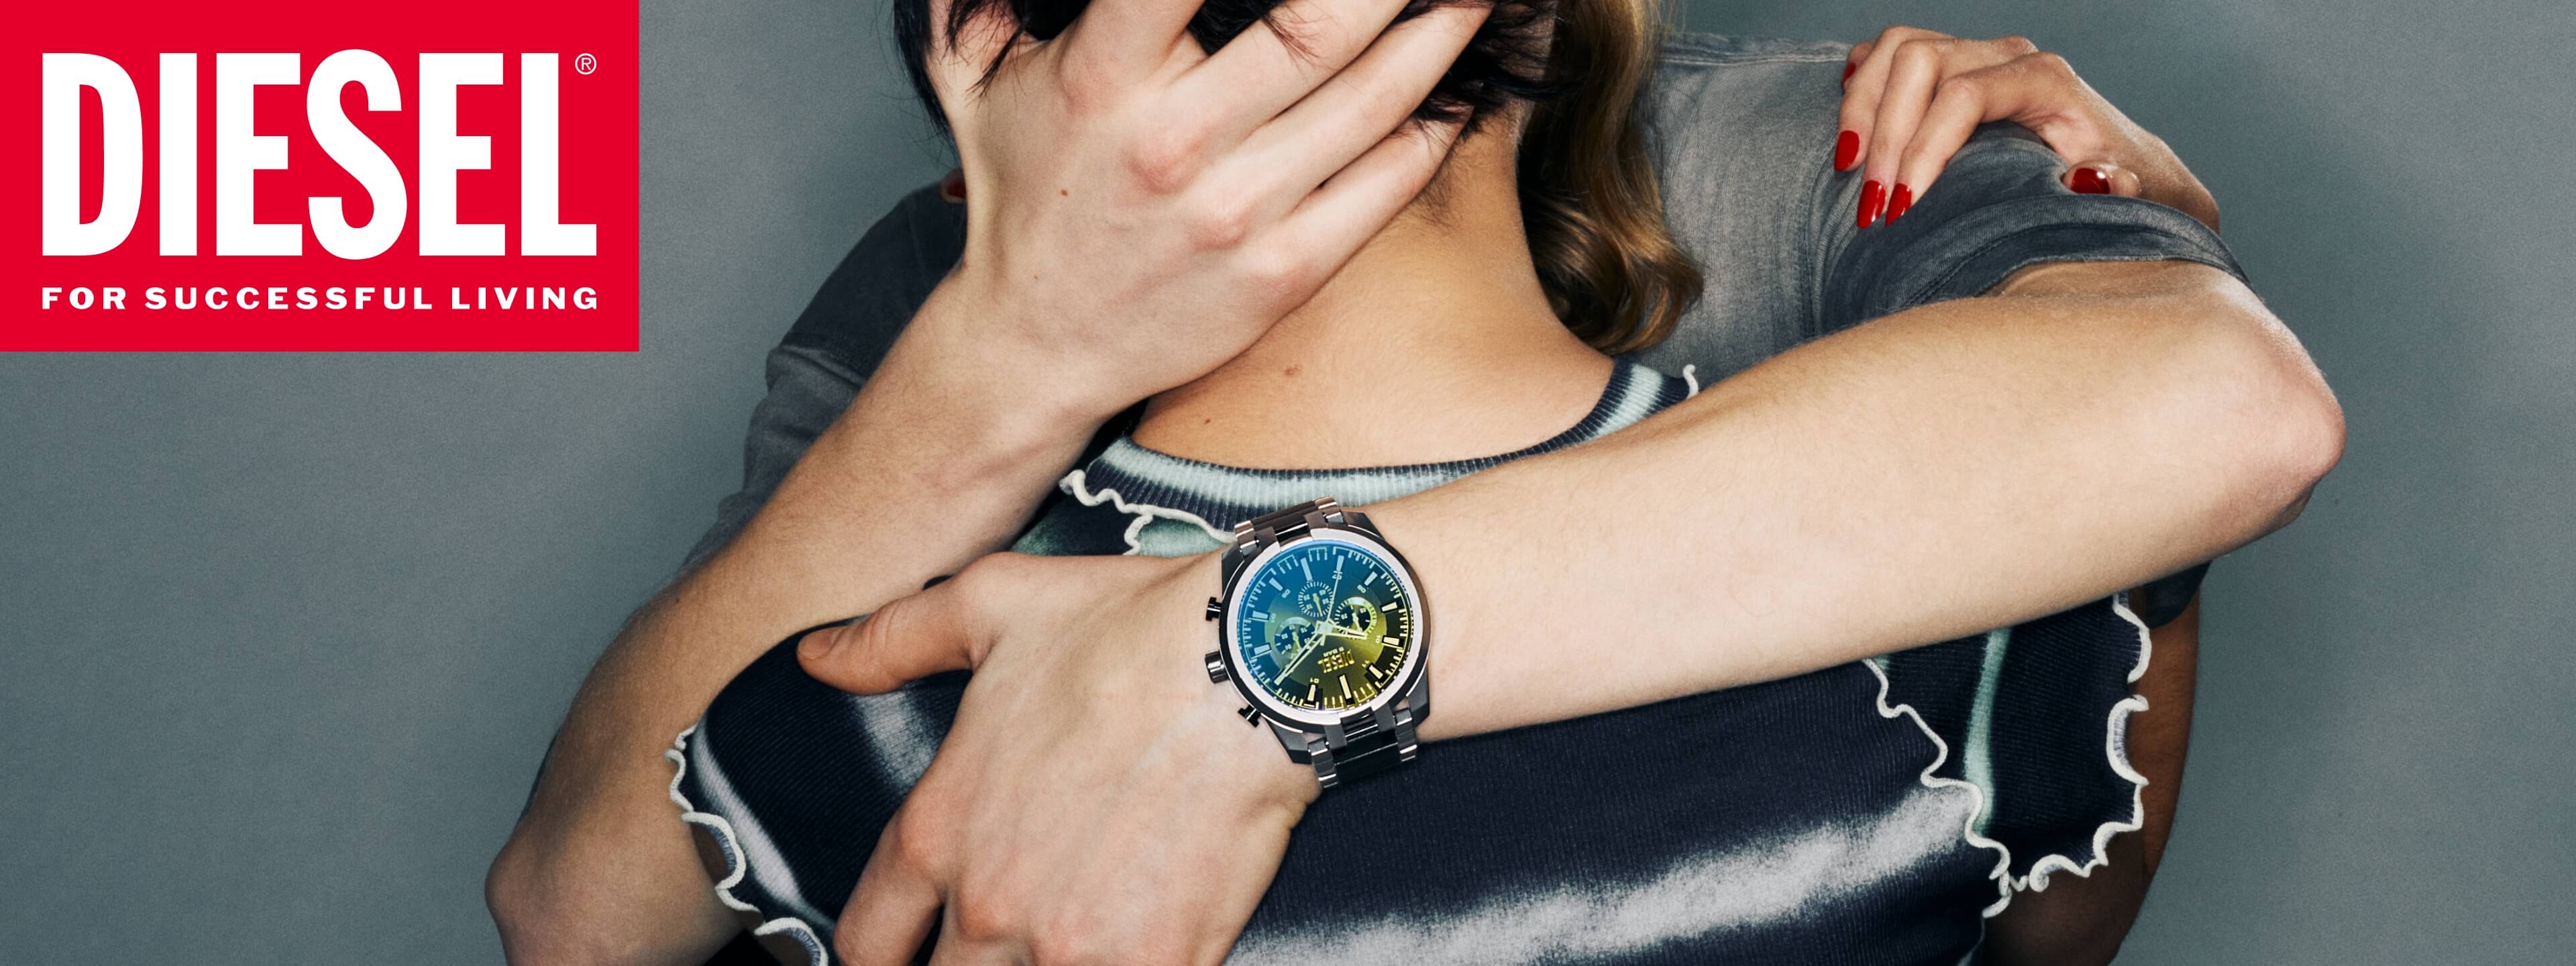 Image of model wearing a watch